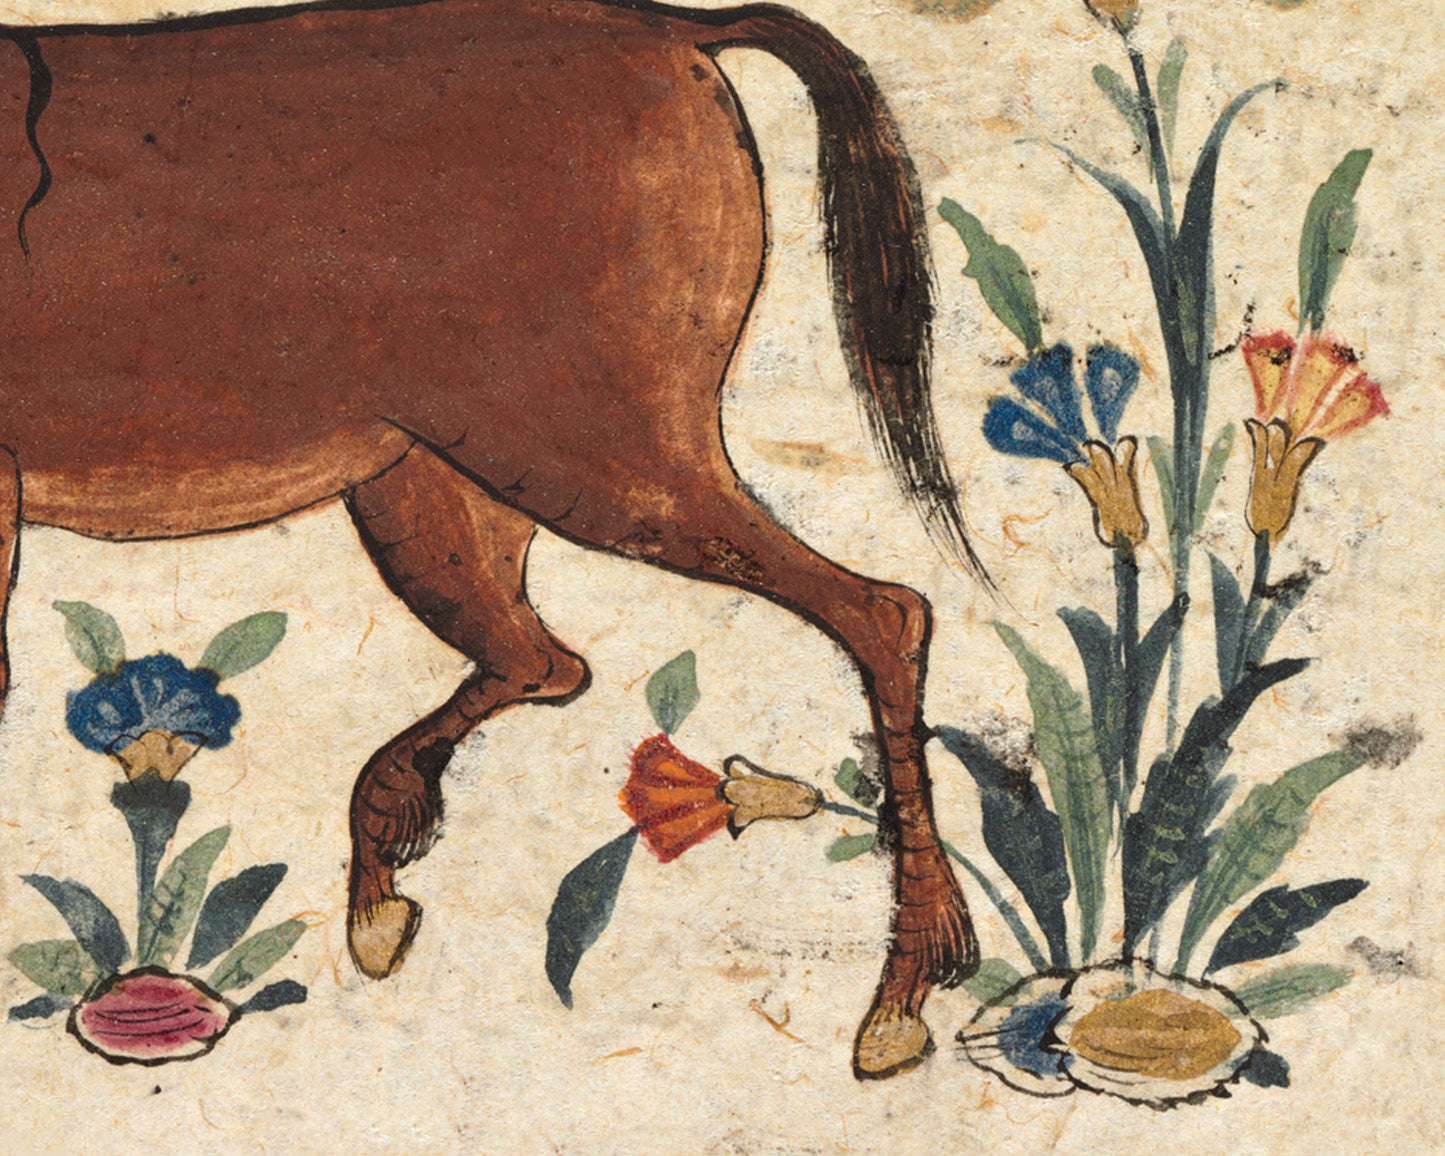 Vintage donkey painting | Persian folk art | Middle Eastern manuscript illustration | Animal fine art | Antique ass